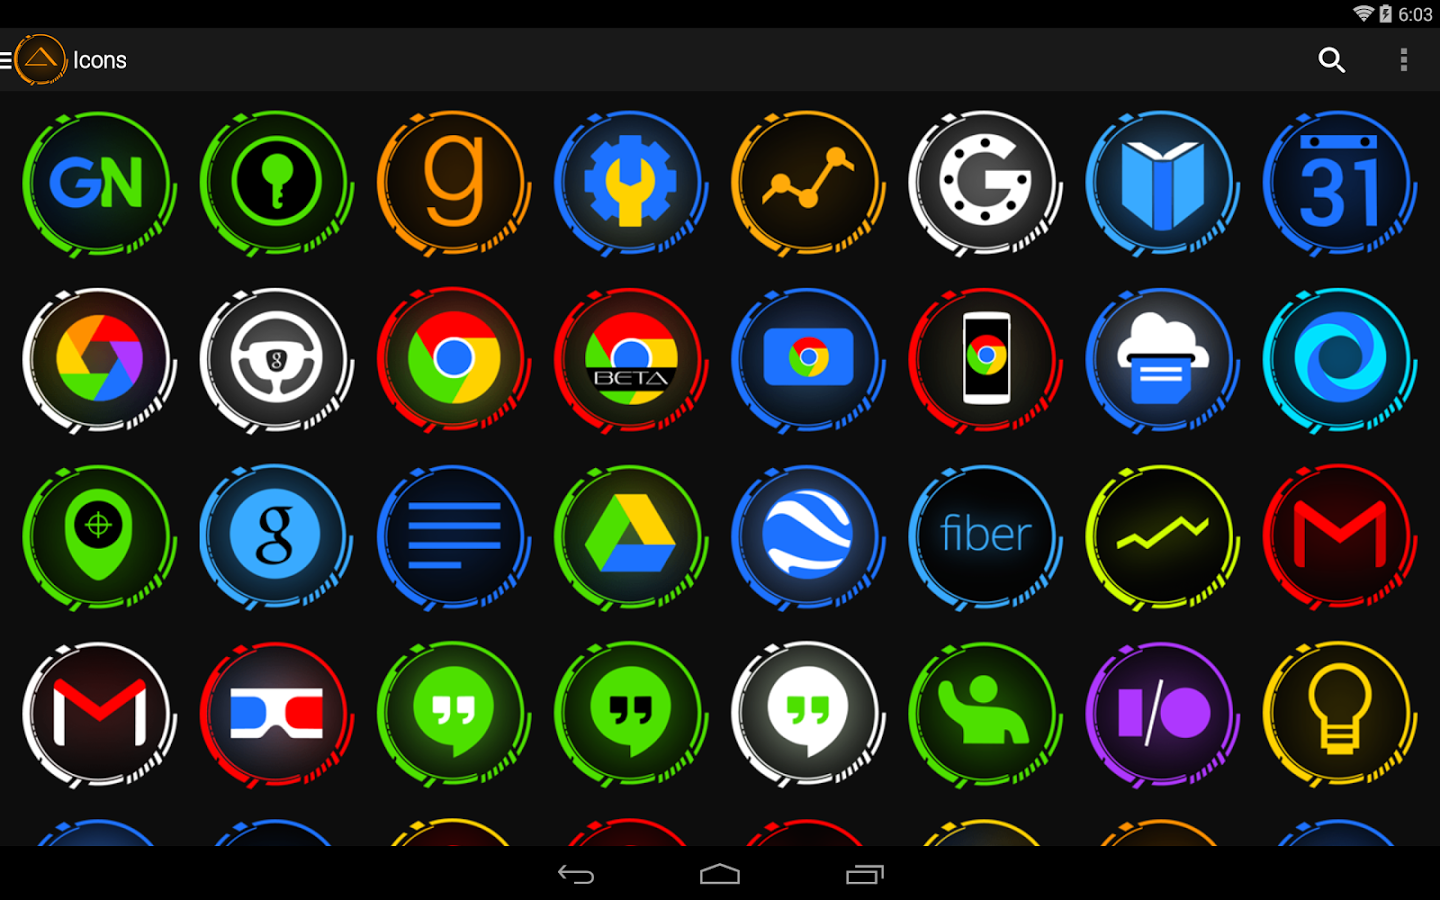 Иконки для приложений на телефон. Иконка андроид. Иконки для приложений. Иконки приложений для андроид. Красивые значки для приложений.